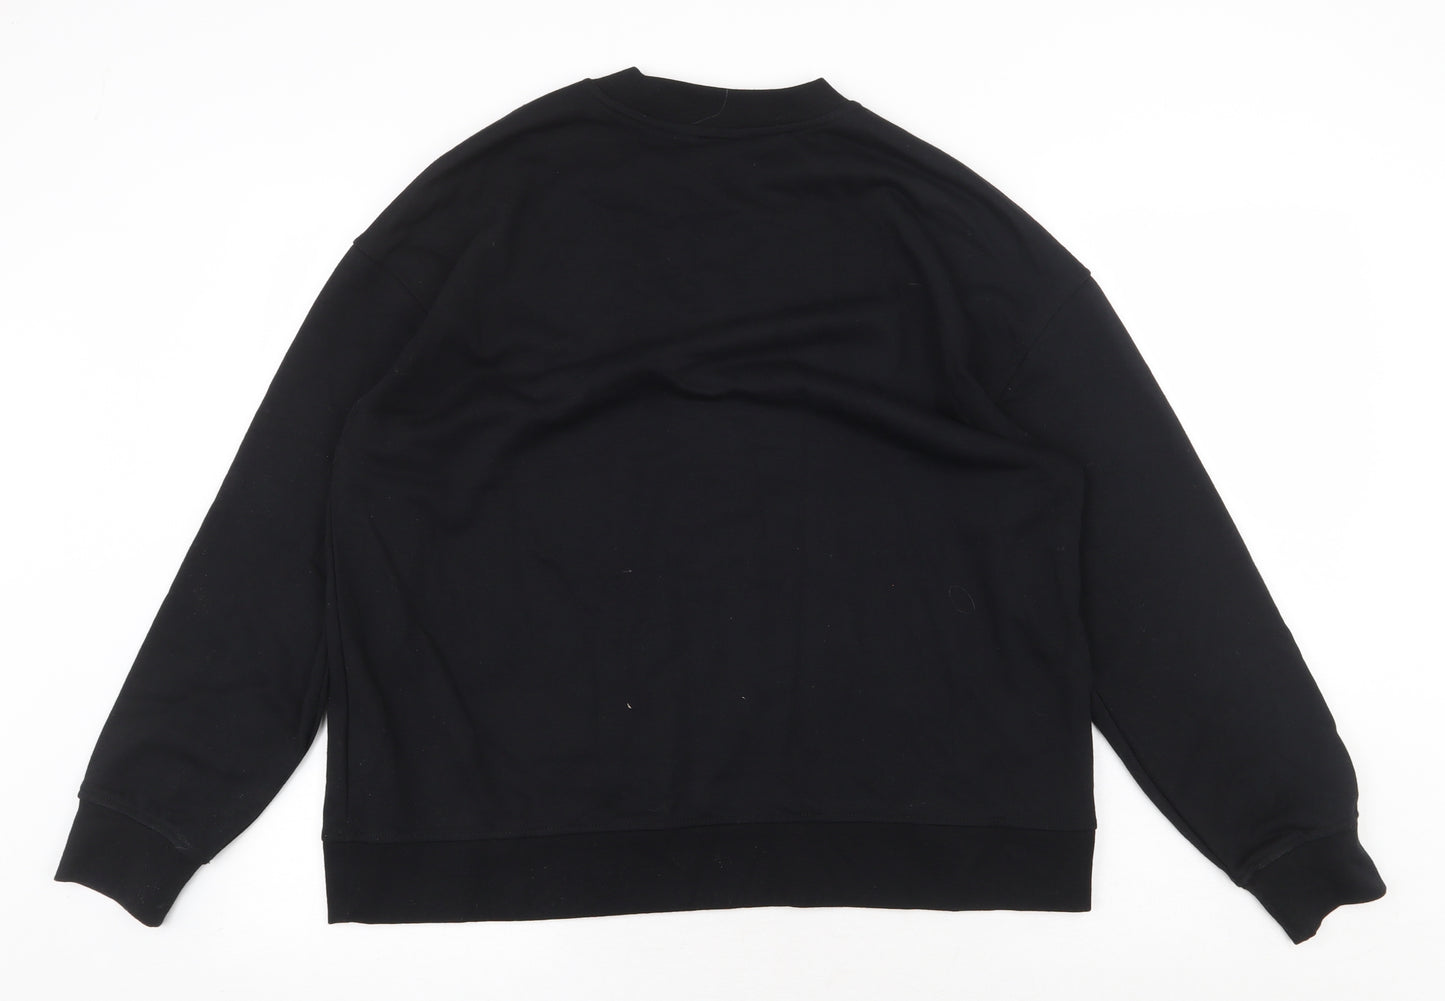 Primark Mens Black Polyester Pullover Sweatshirt Size M